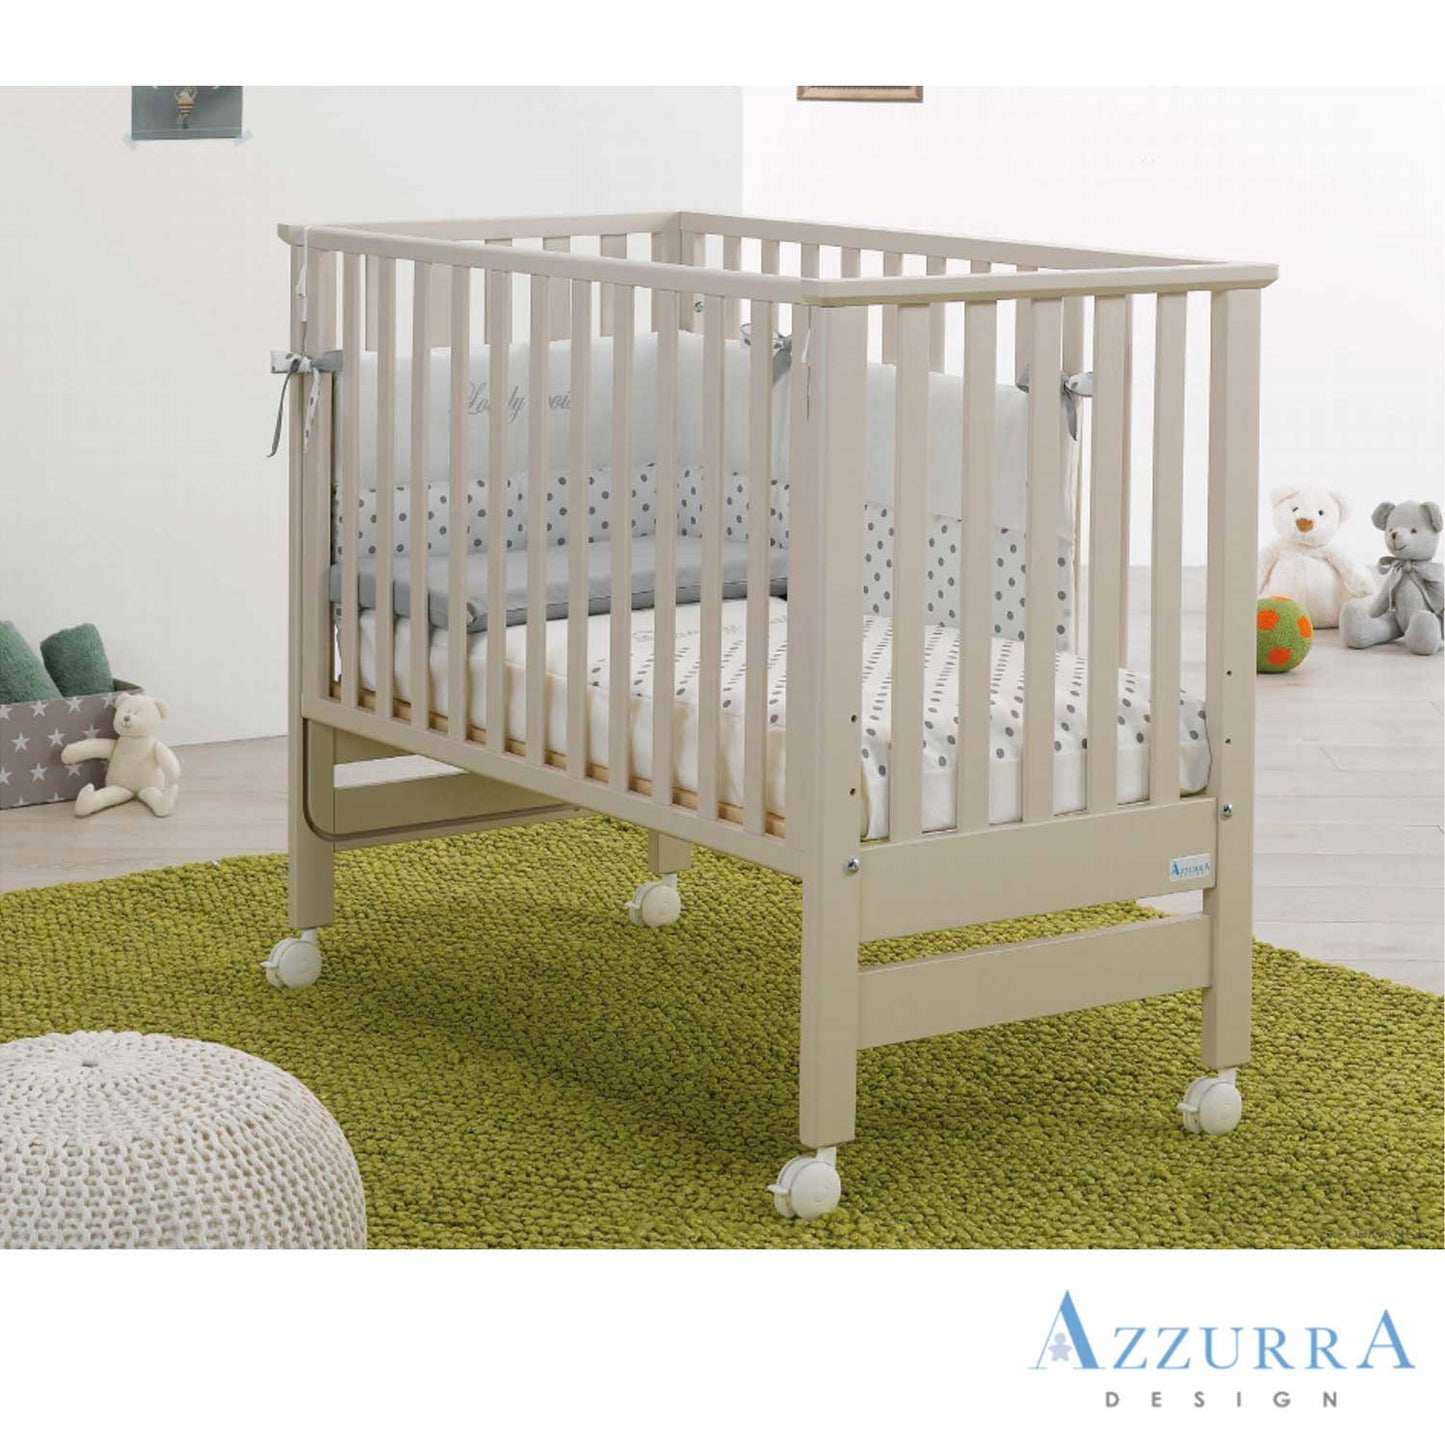 Azzurra Design - Co-sleeping Cot Contact Mattress Included